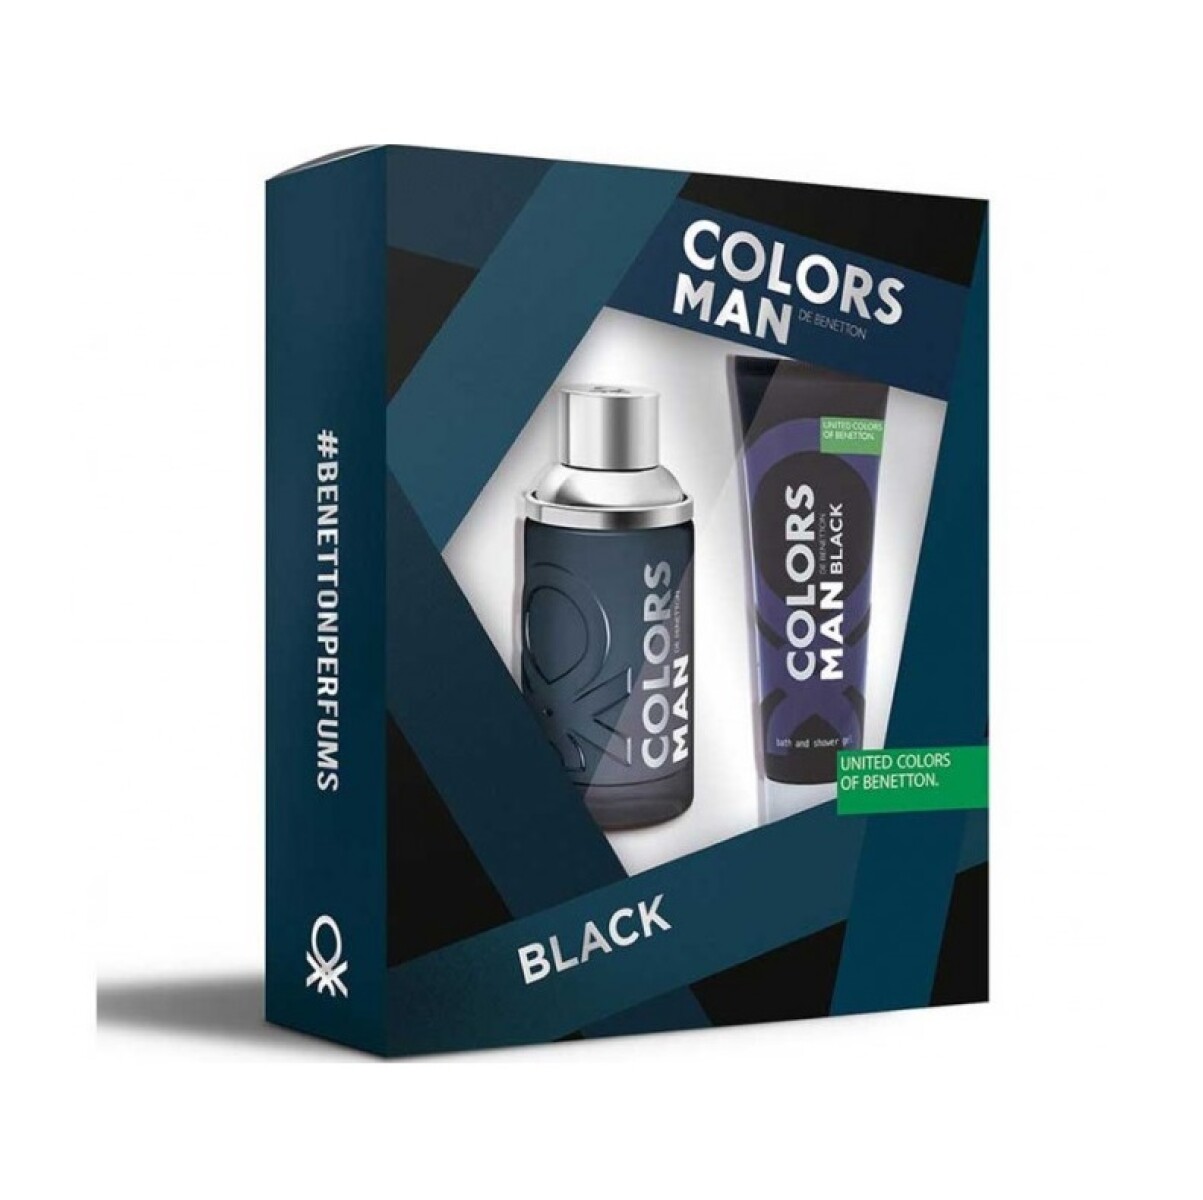 Set Perfume Benetton Colors Man Black Edt + Body Lotion - 001 